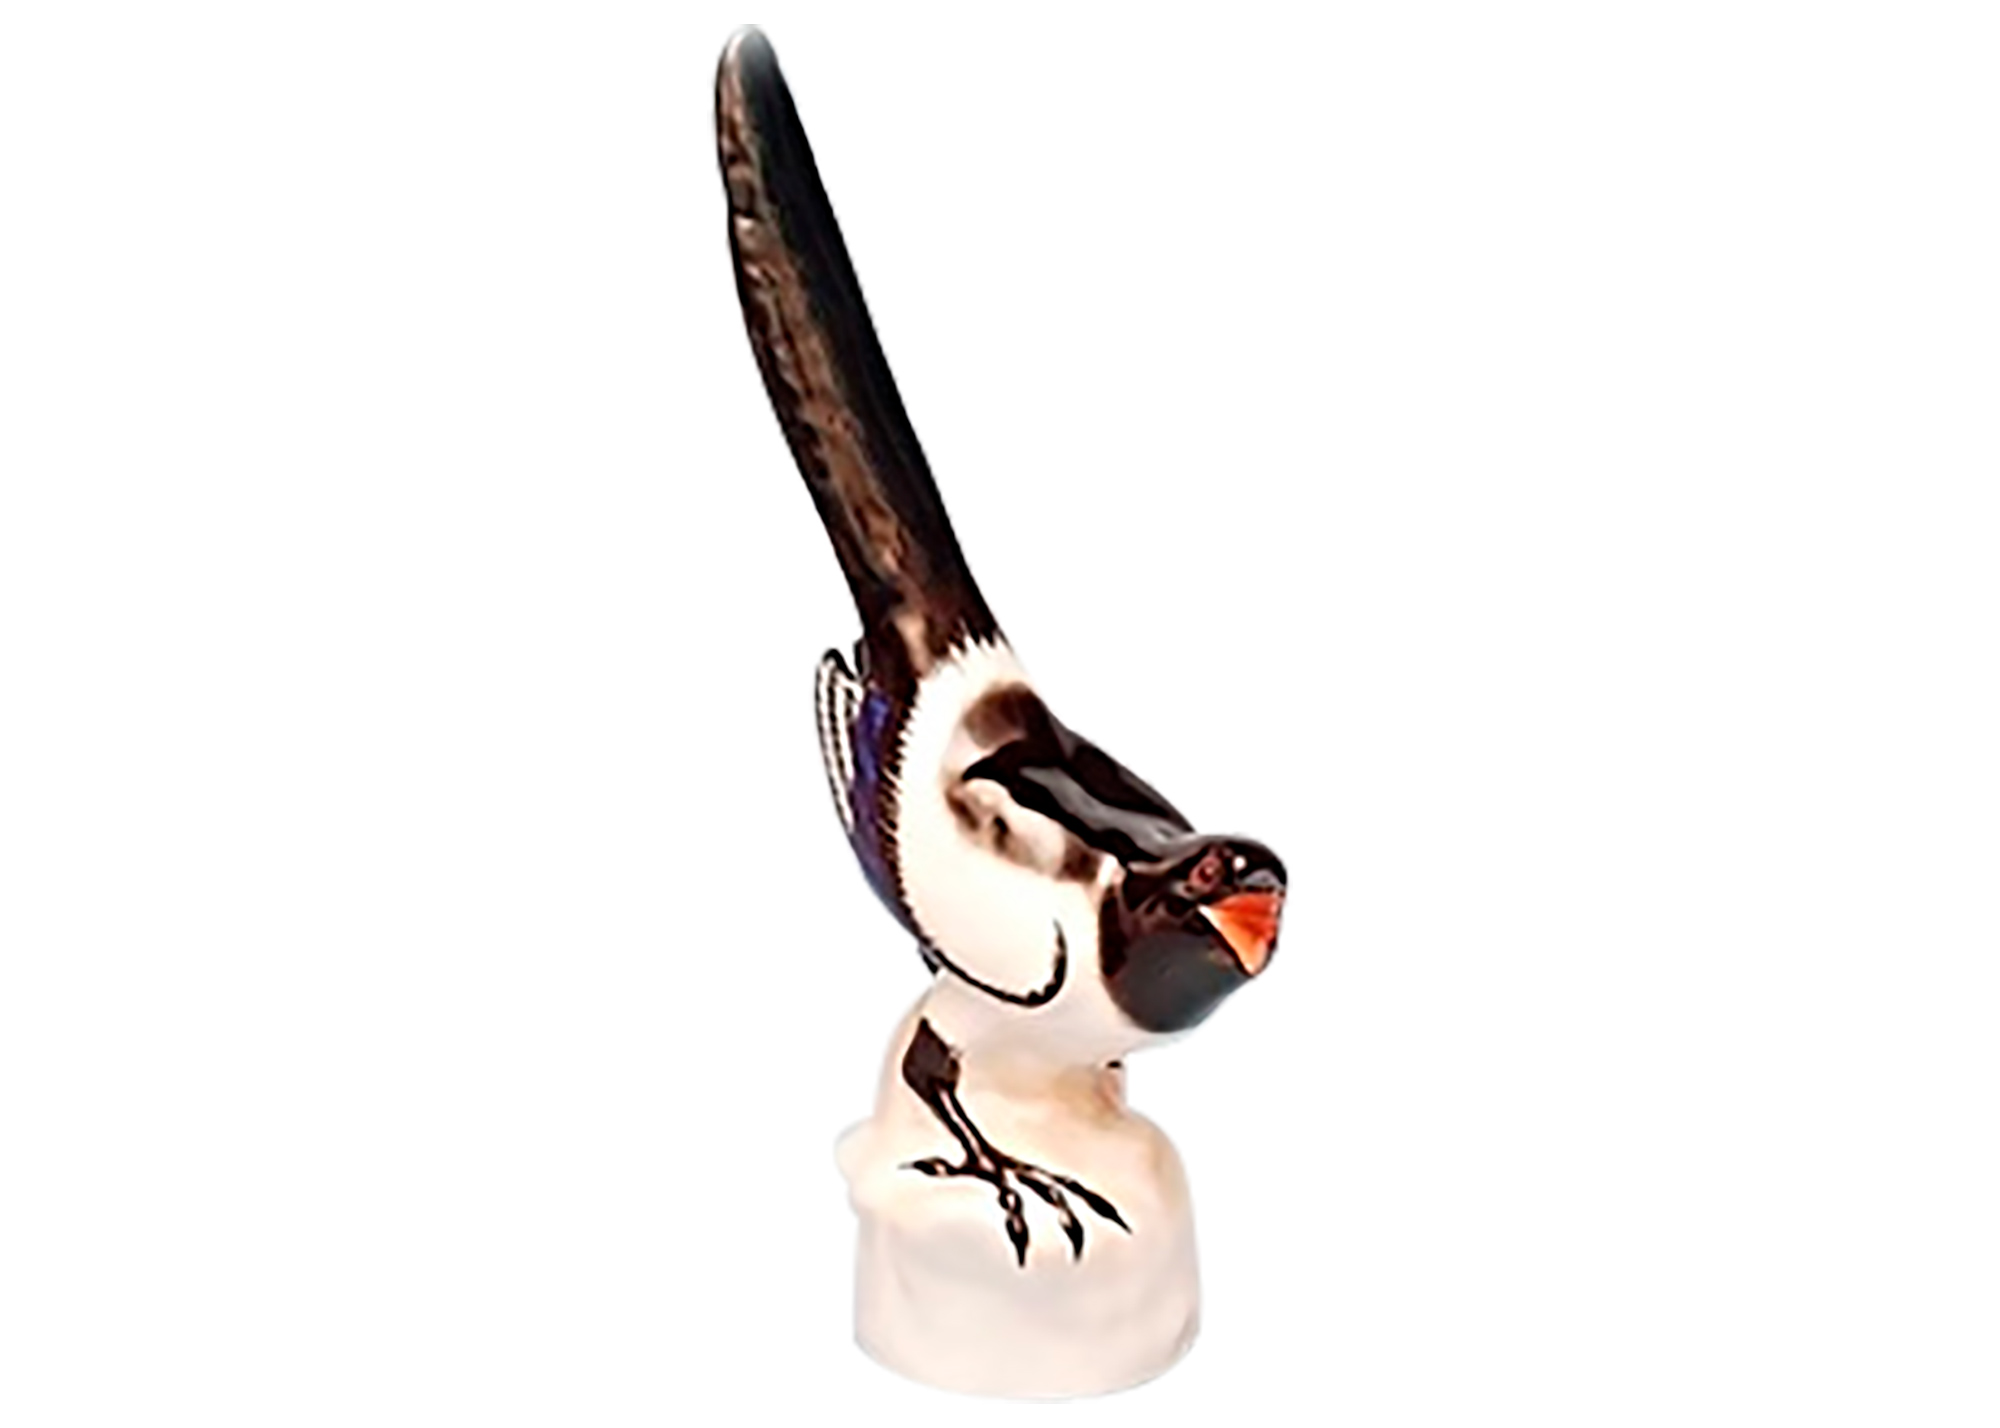 Buy Porcelain Magpie Figurine at GoldenCockerel.com